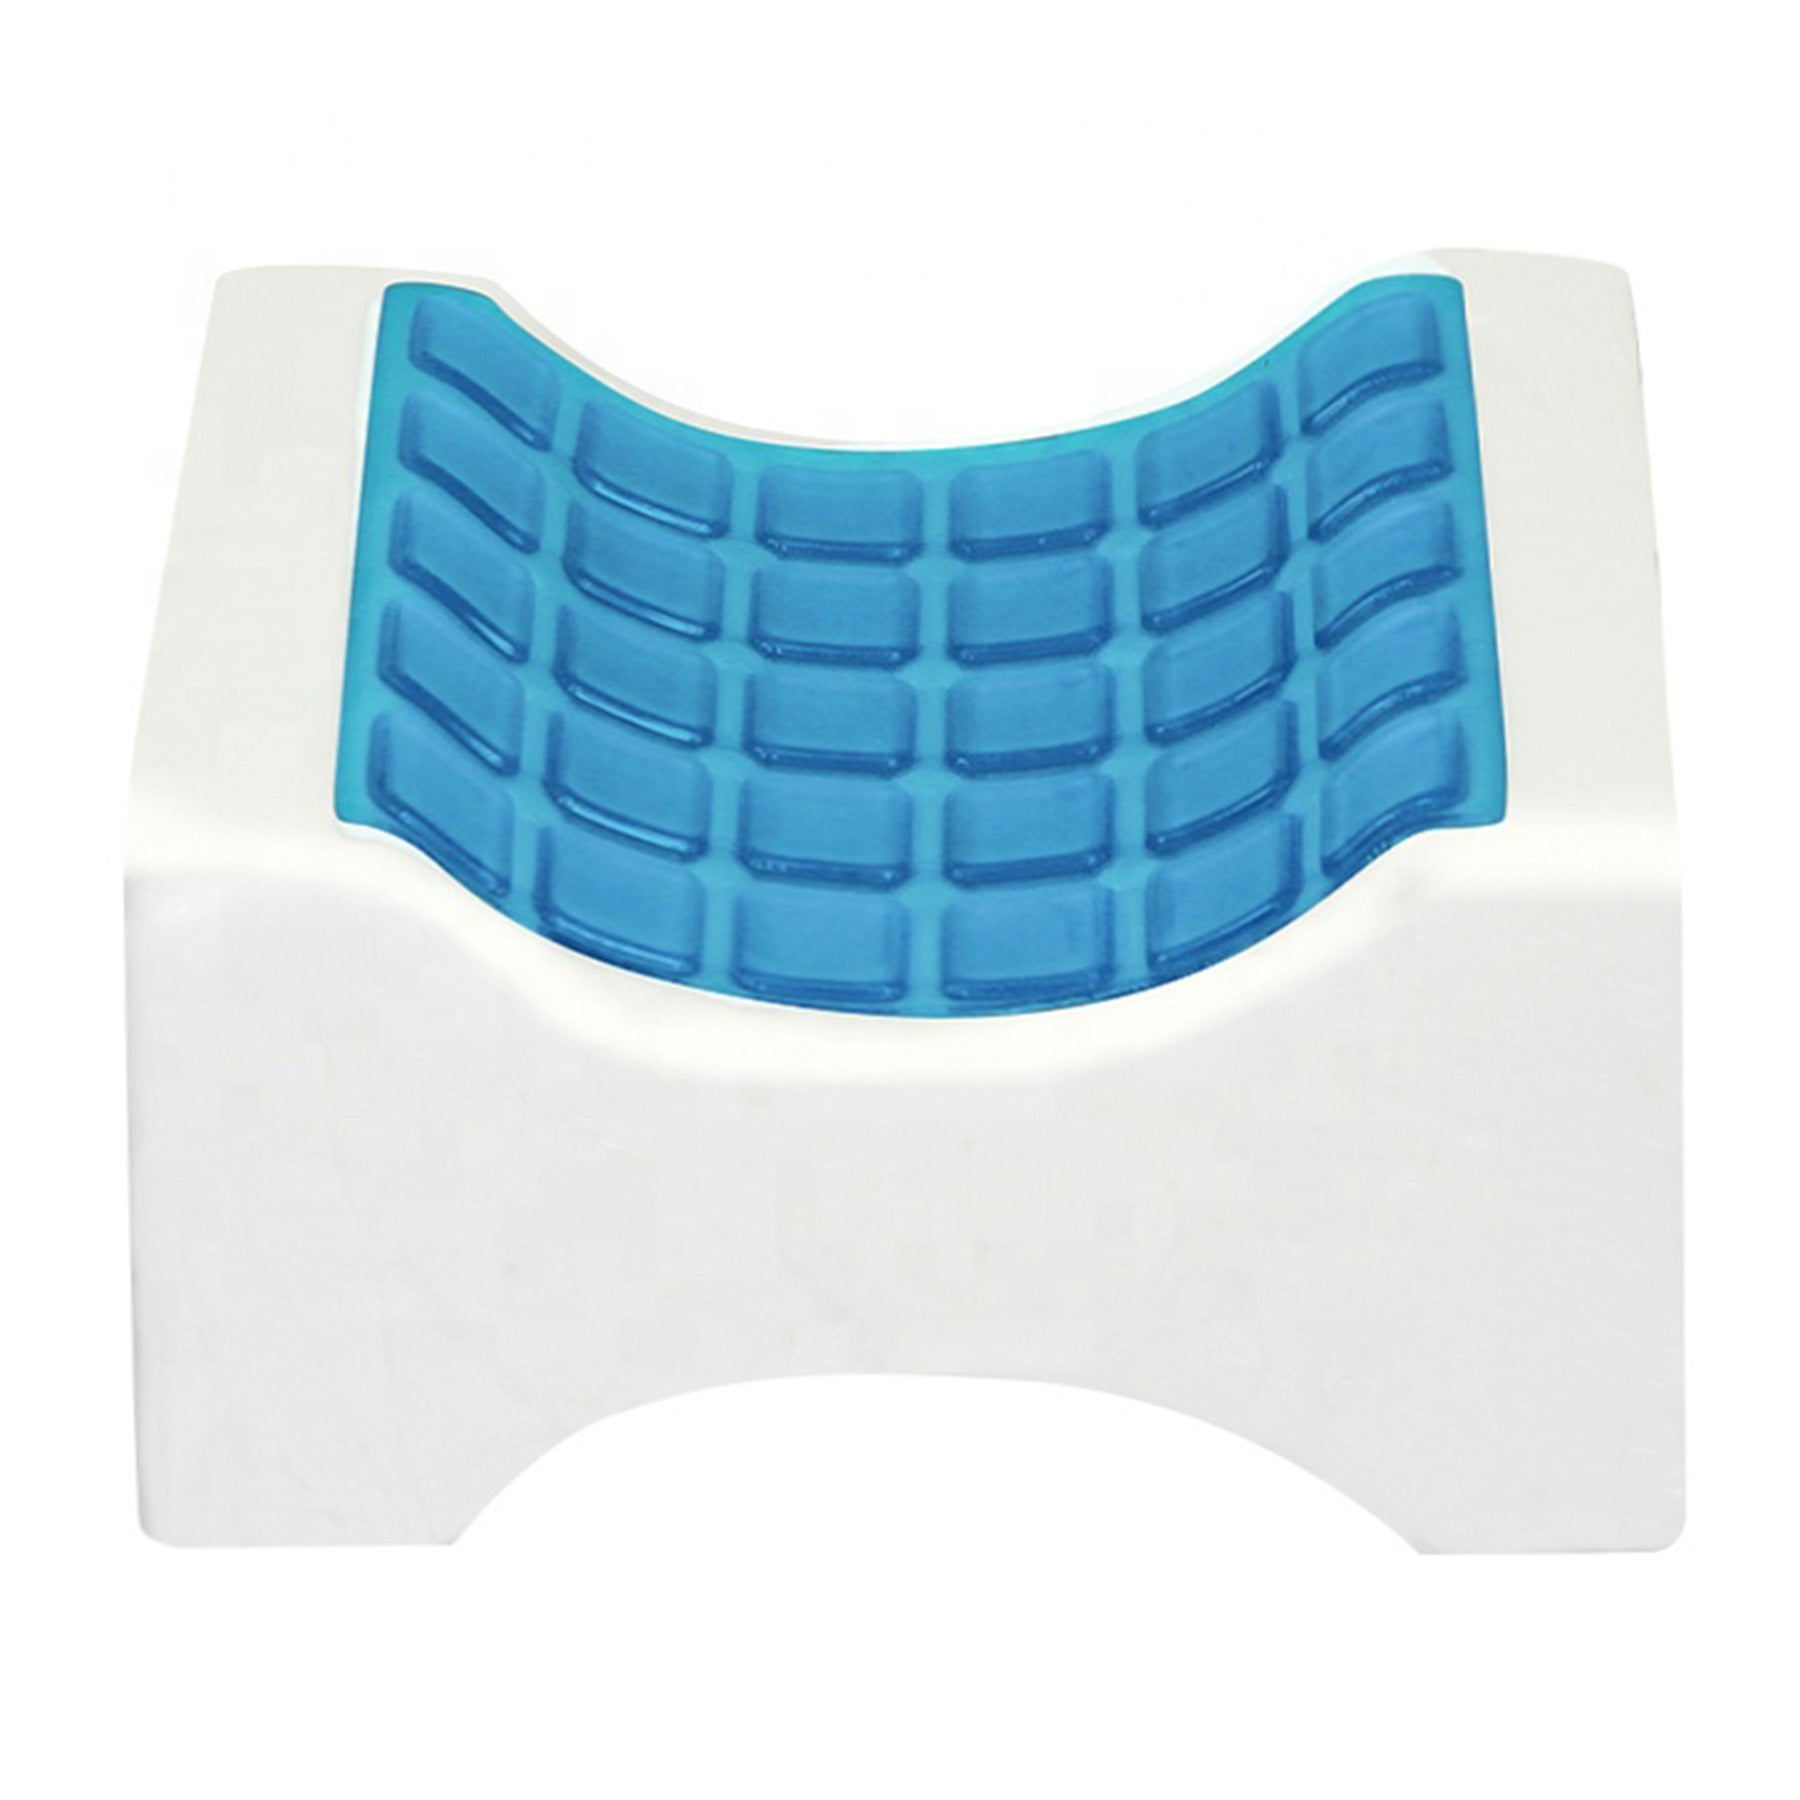 Gel knee pillow - blue color